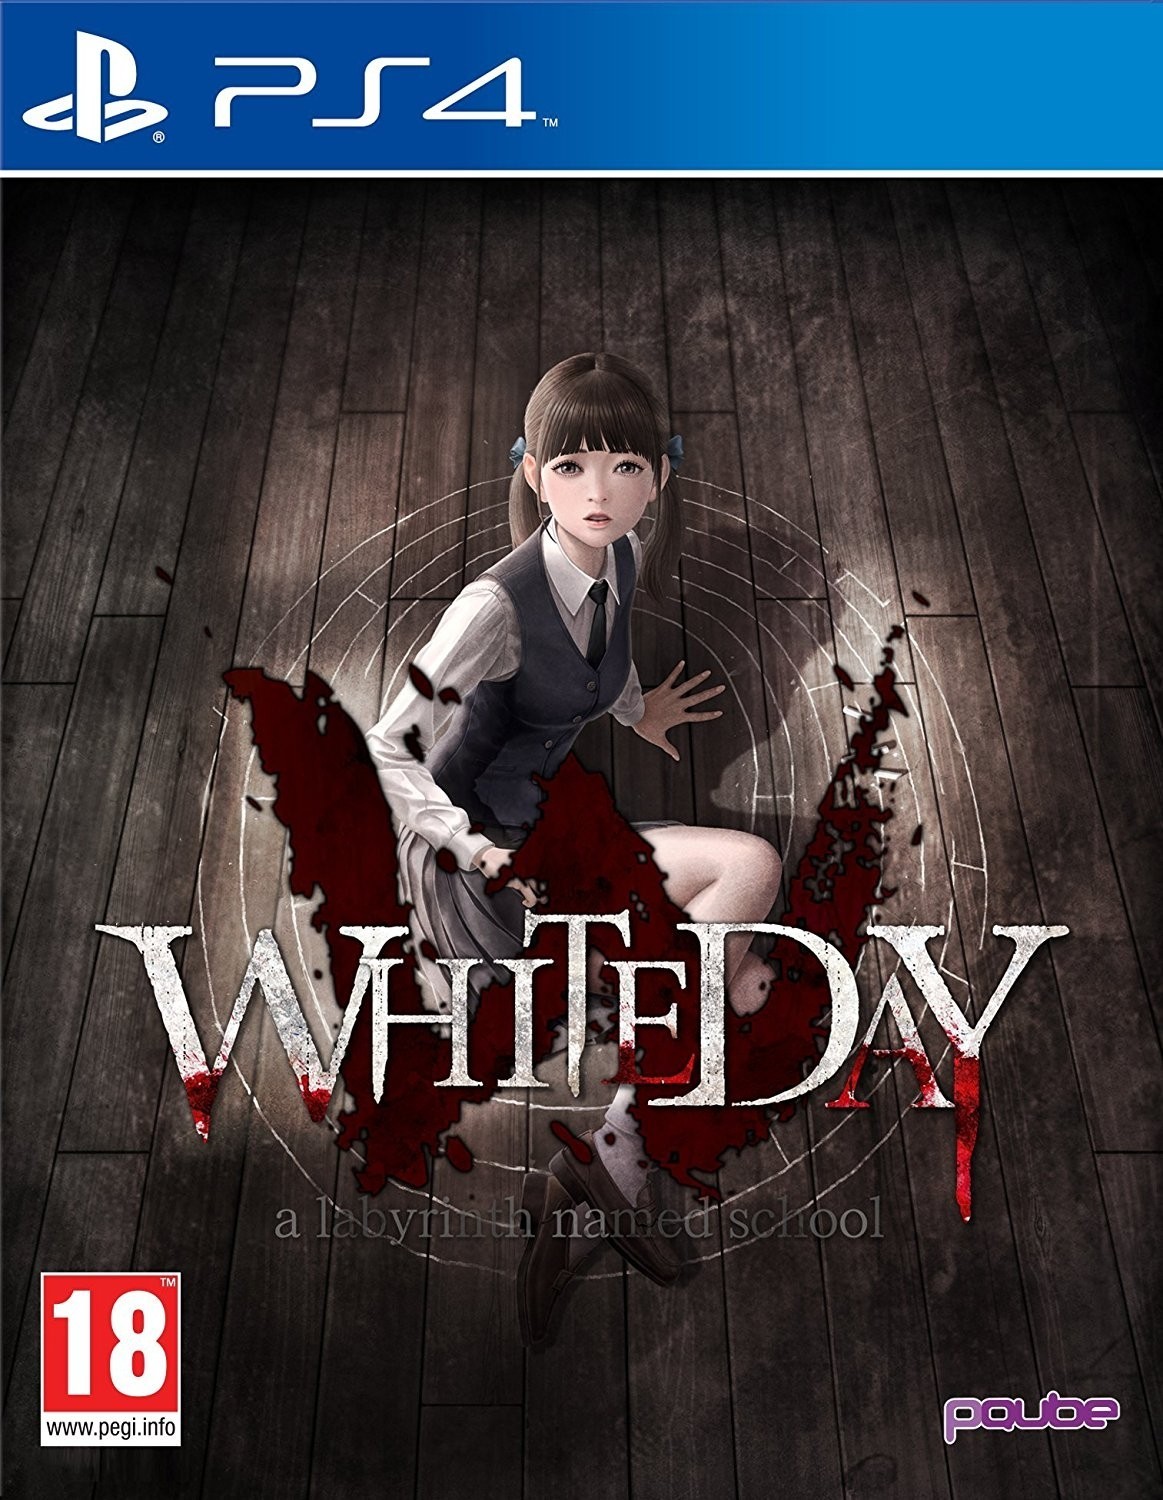 White Day: A Labyrinth Named School (PS4), ROI Games (Sonnori), Gachyon Soft